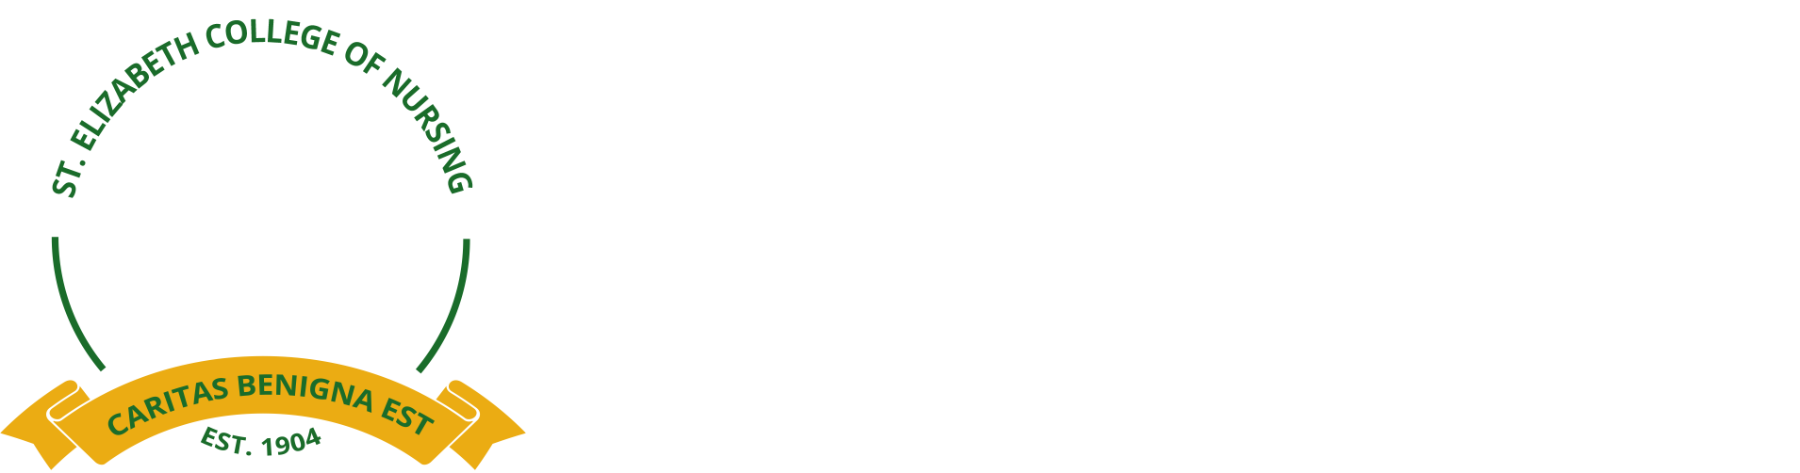 St. Elizabeth College of Nursing